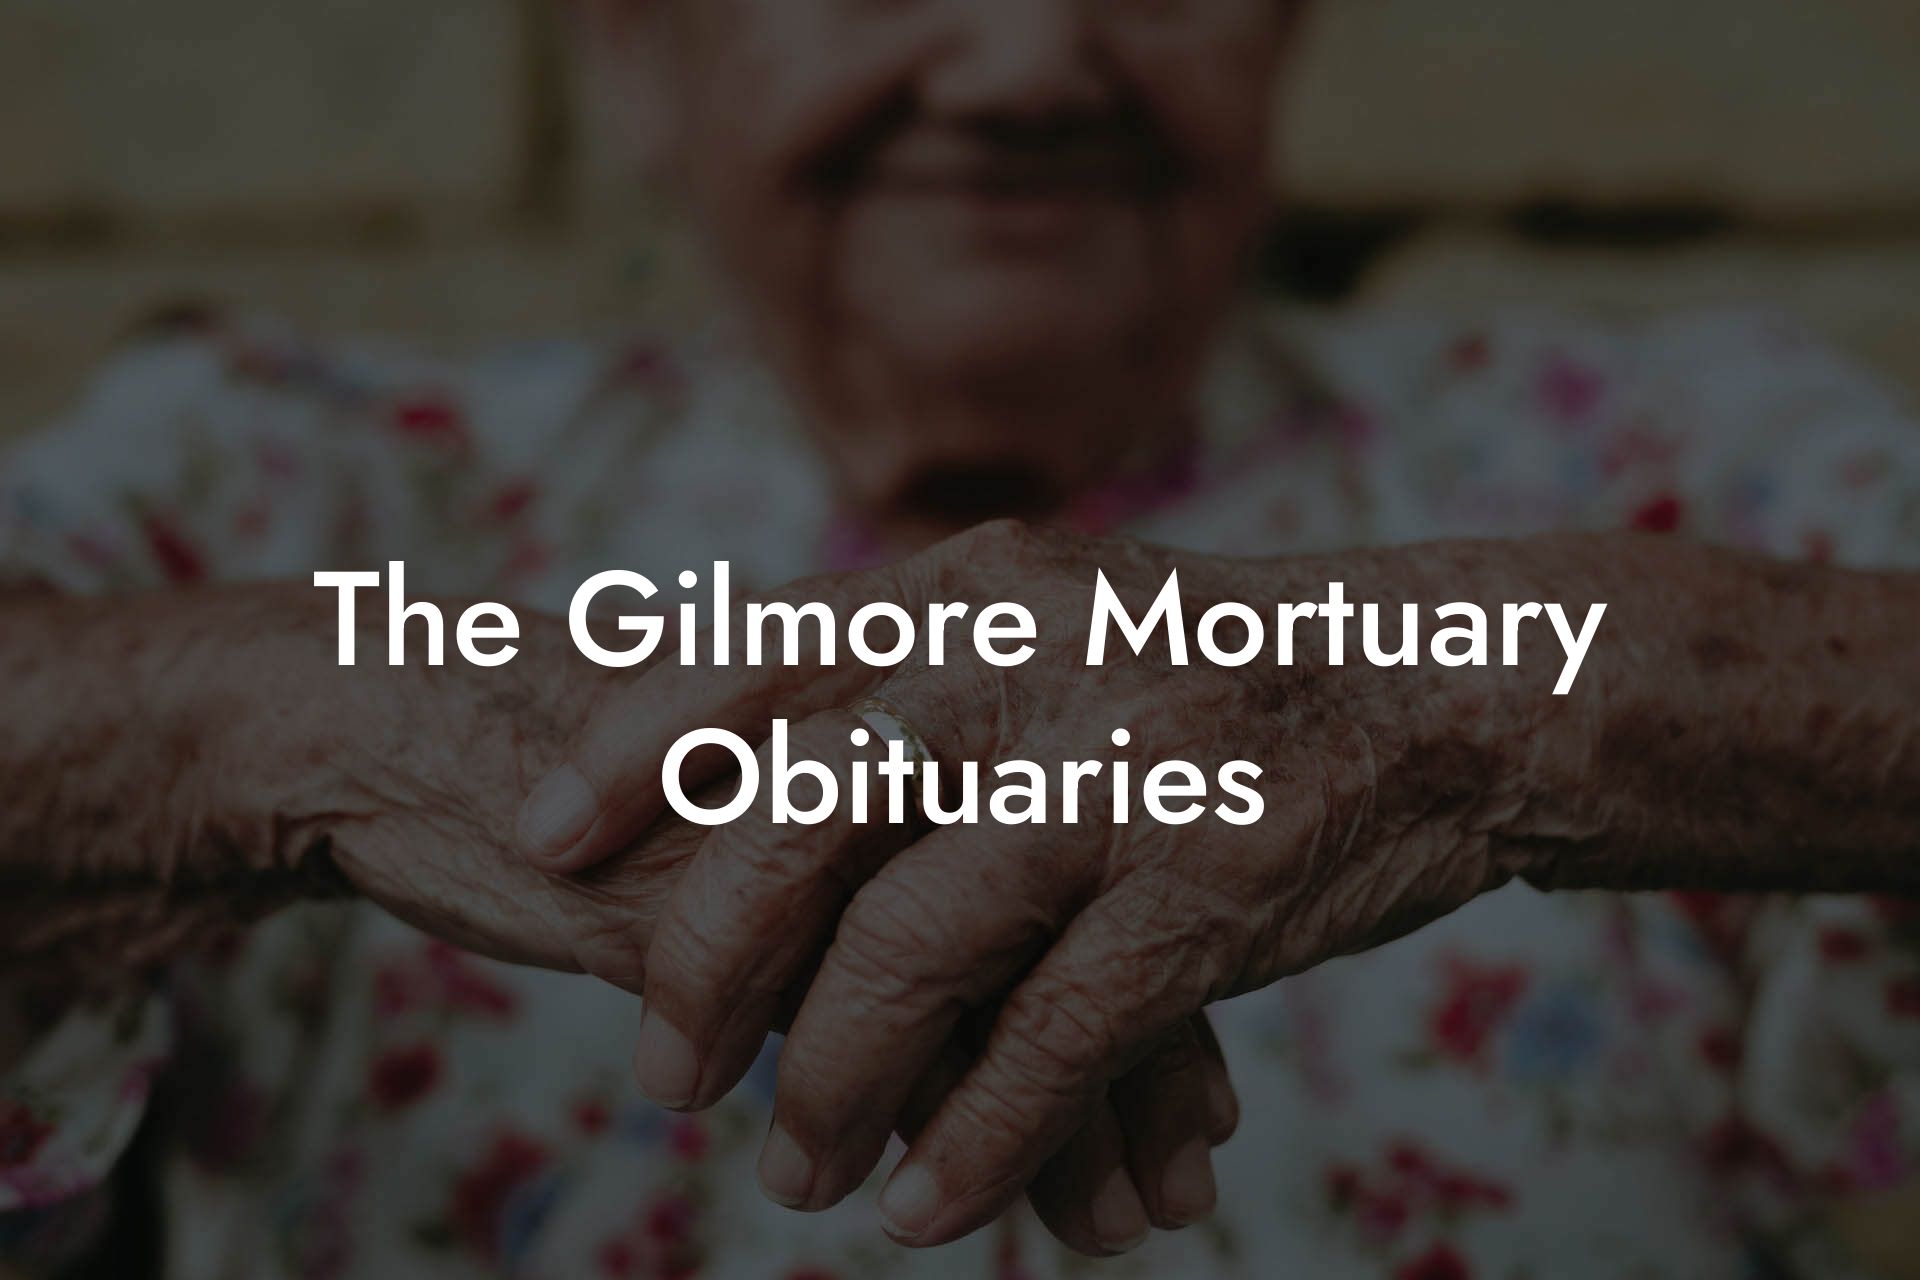 The Gilmore Mortuary Obituaries